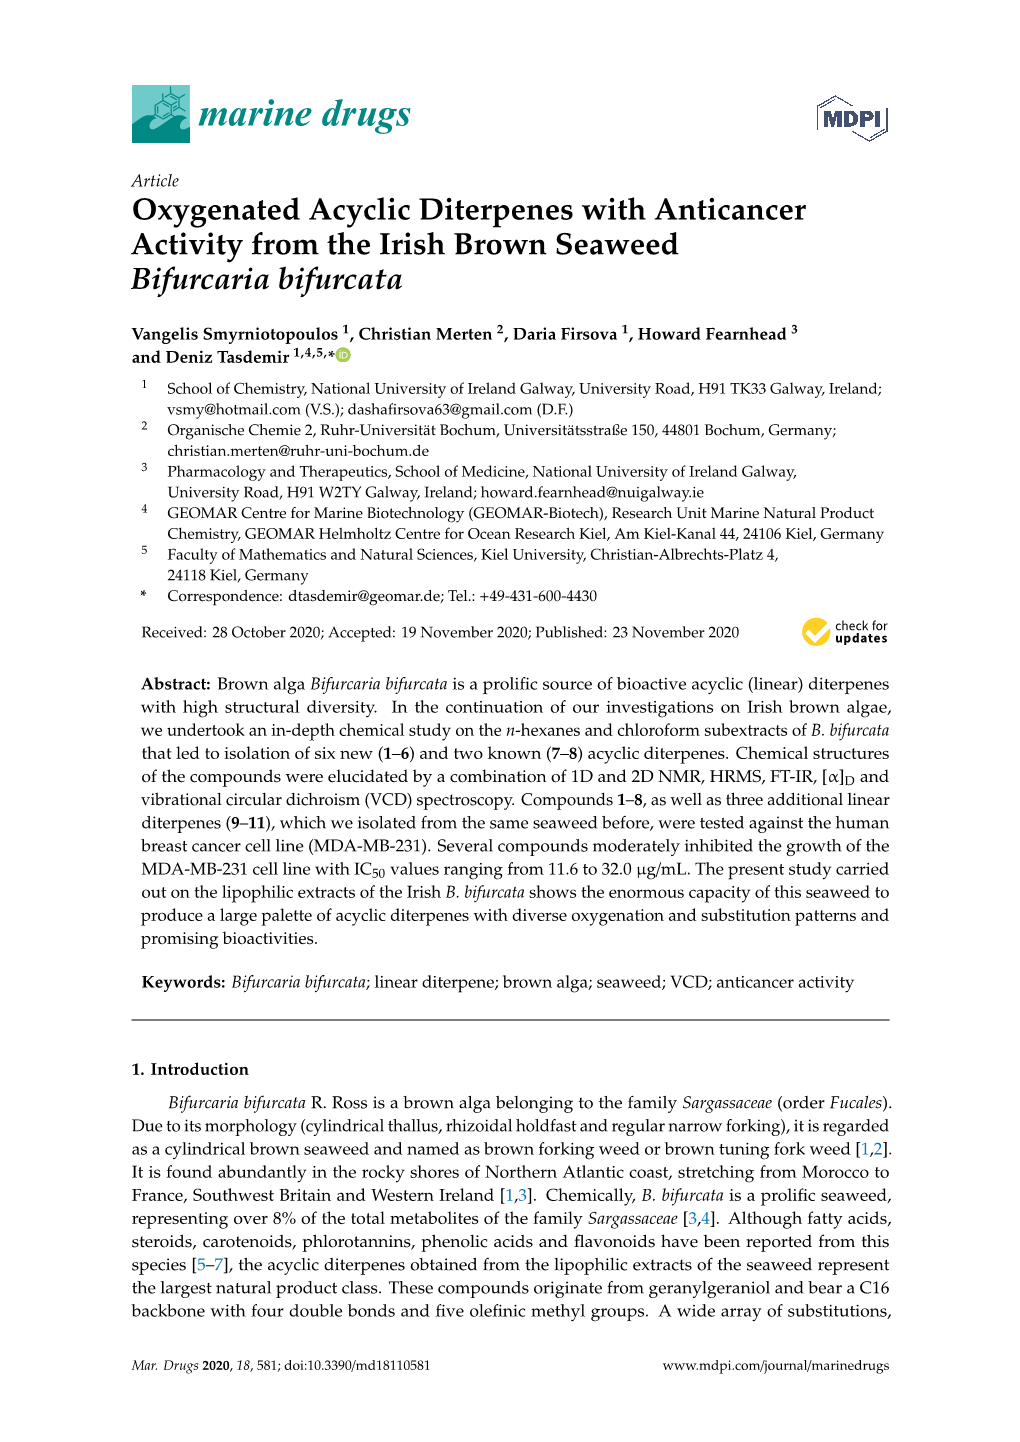 Oxygenated Acyclic Diterpenes with Anticancer Activity from the Irish Brown Seaweed Bifurcaria Bifurcata